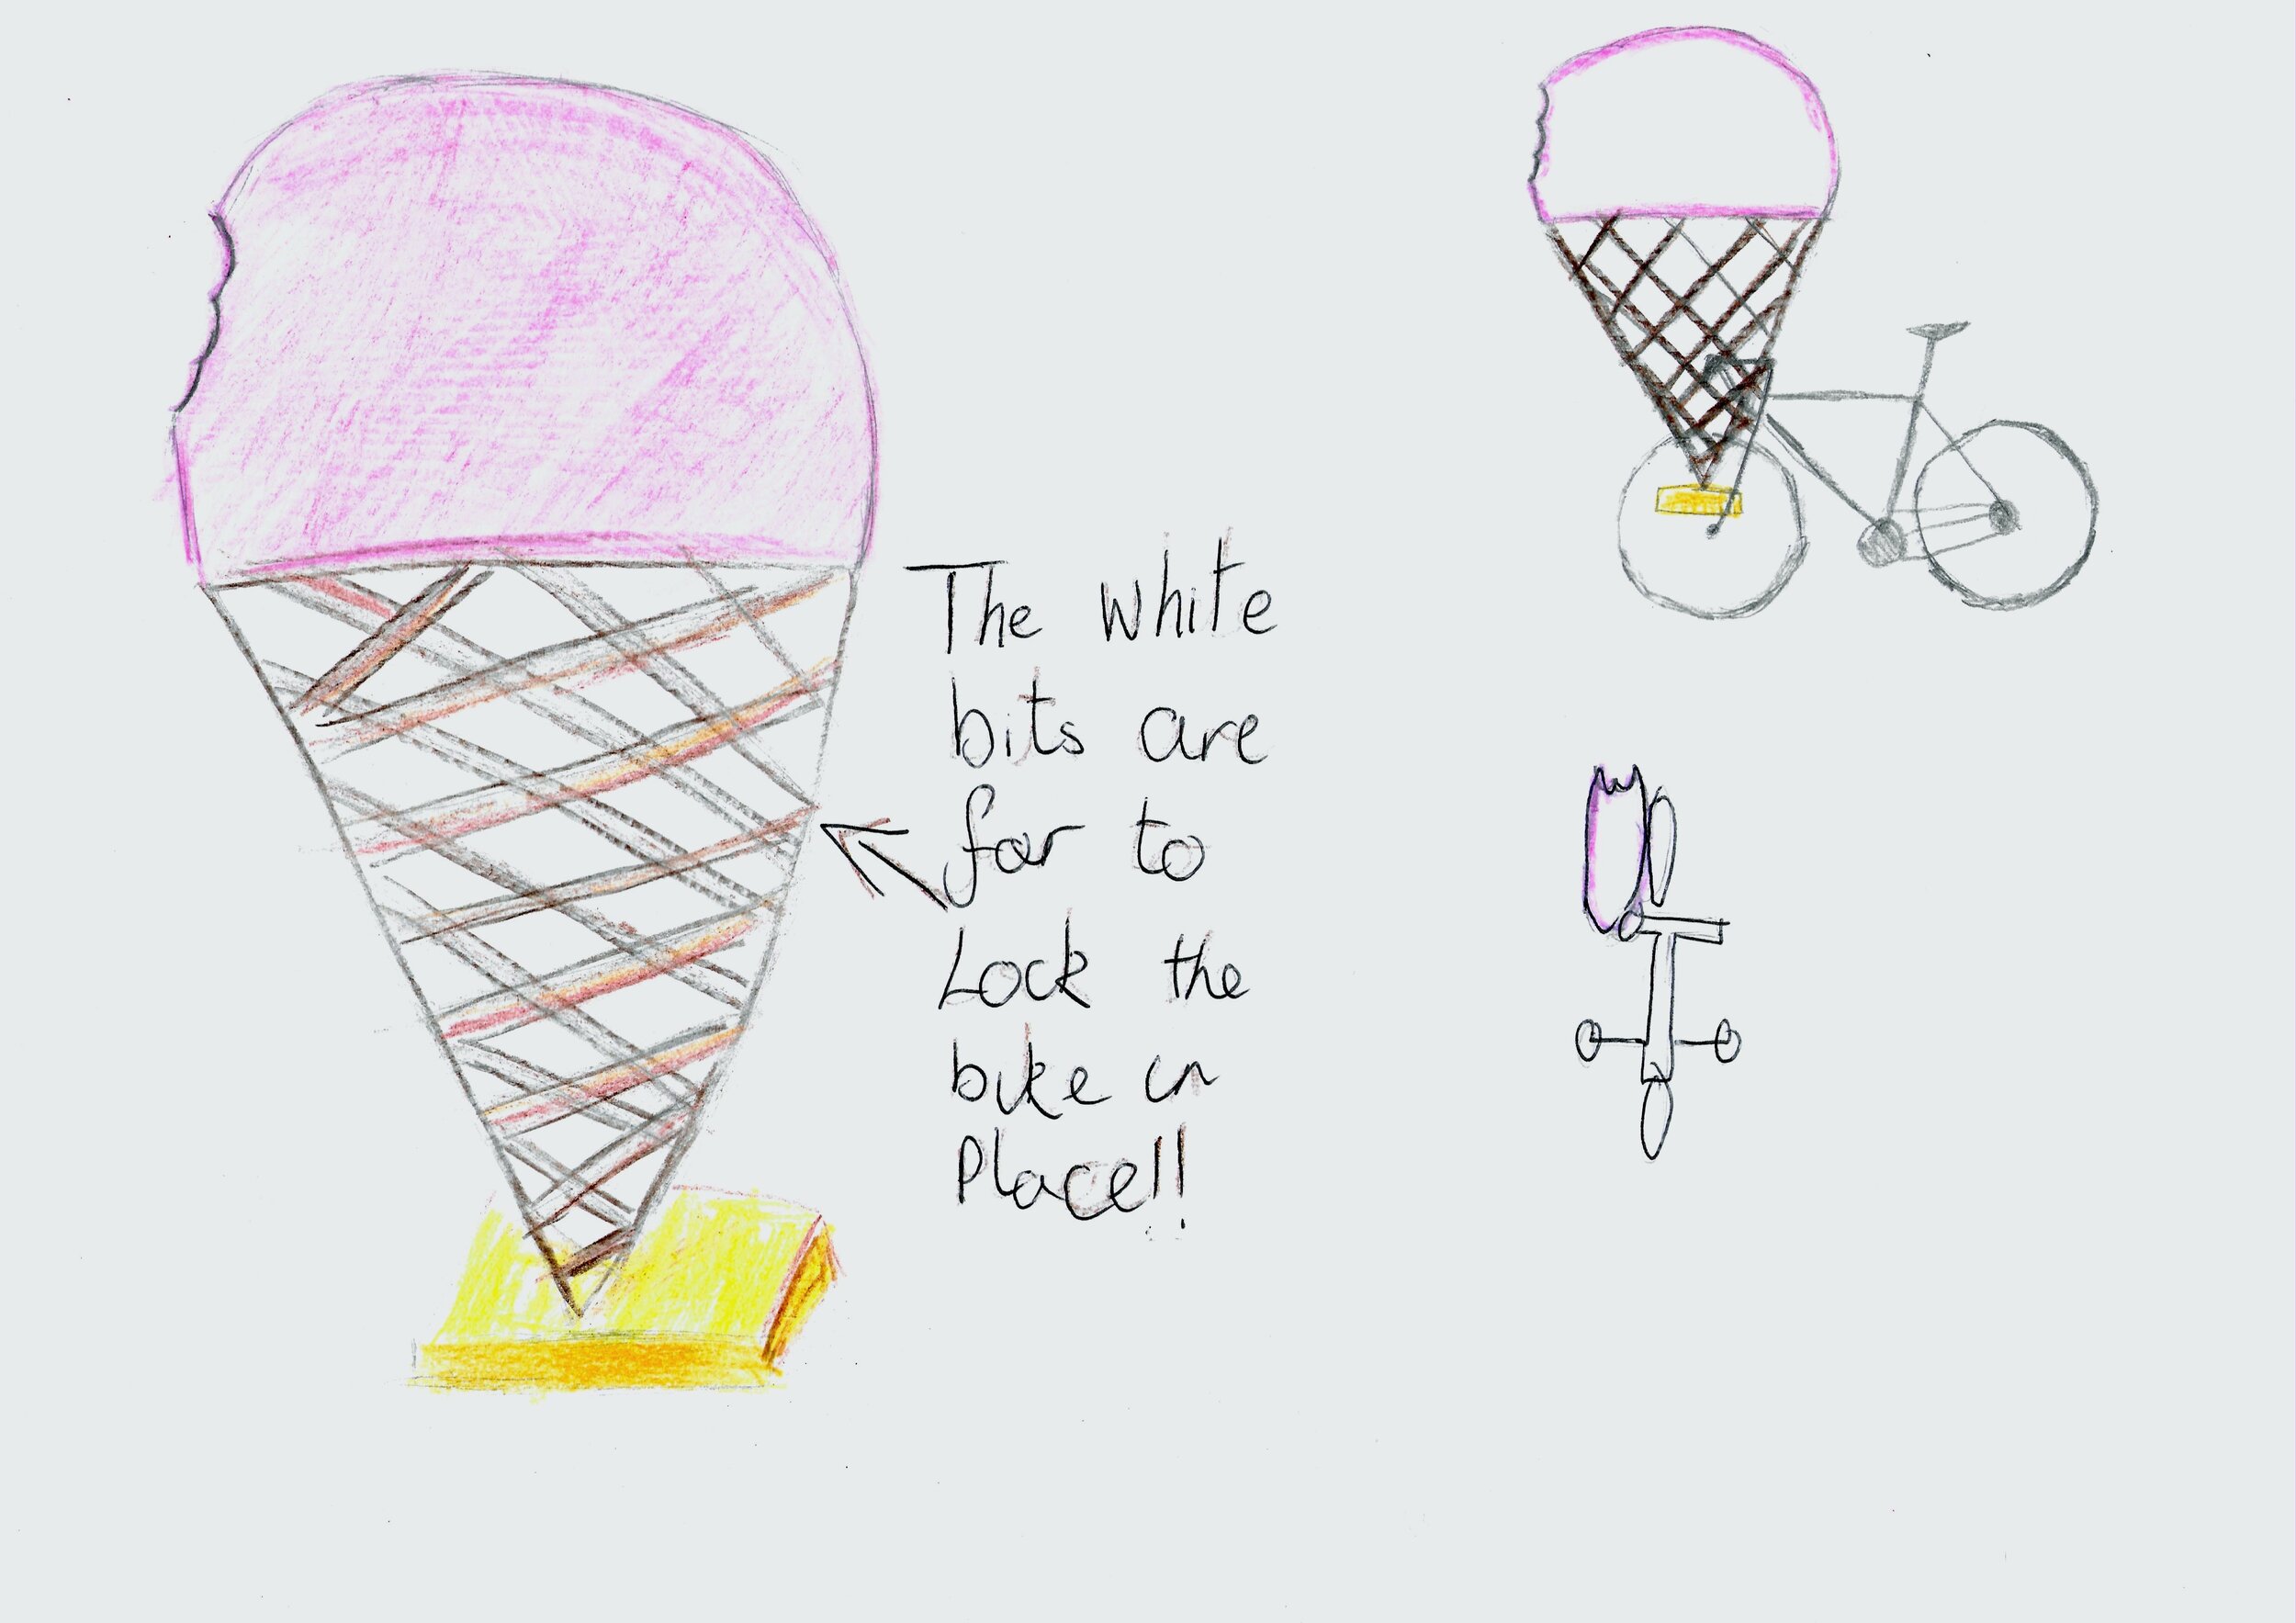 Ice cream bike rack design sketch by pupil at Blackness Primary School